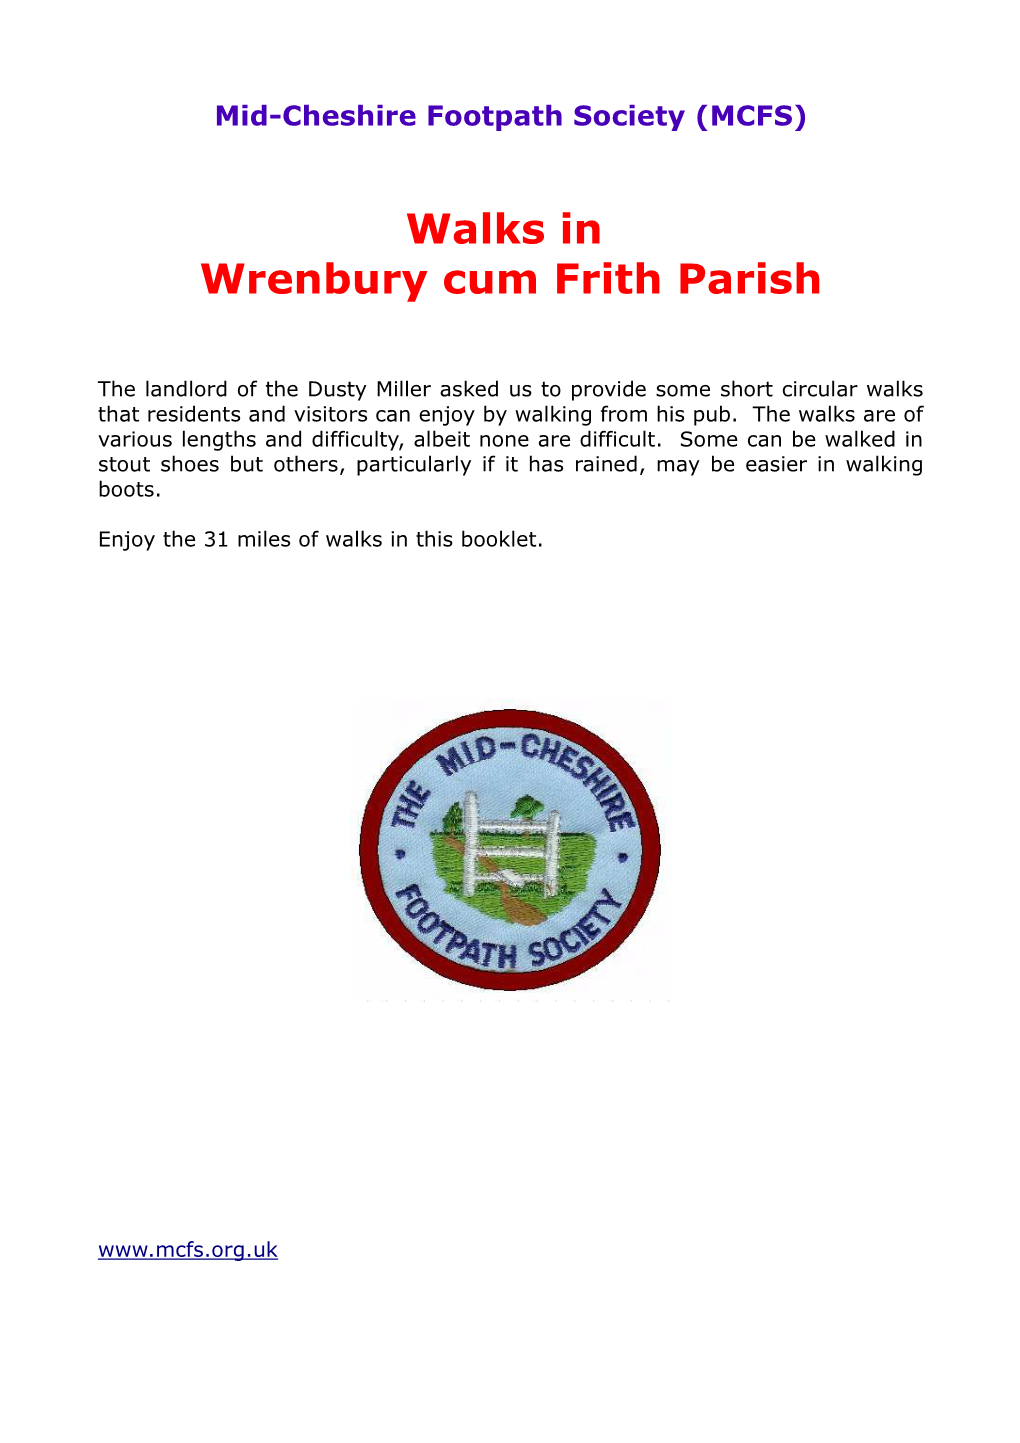 Wrenbury Parish Walks